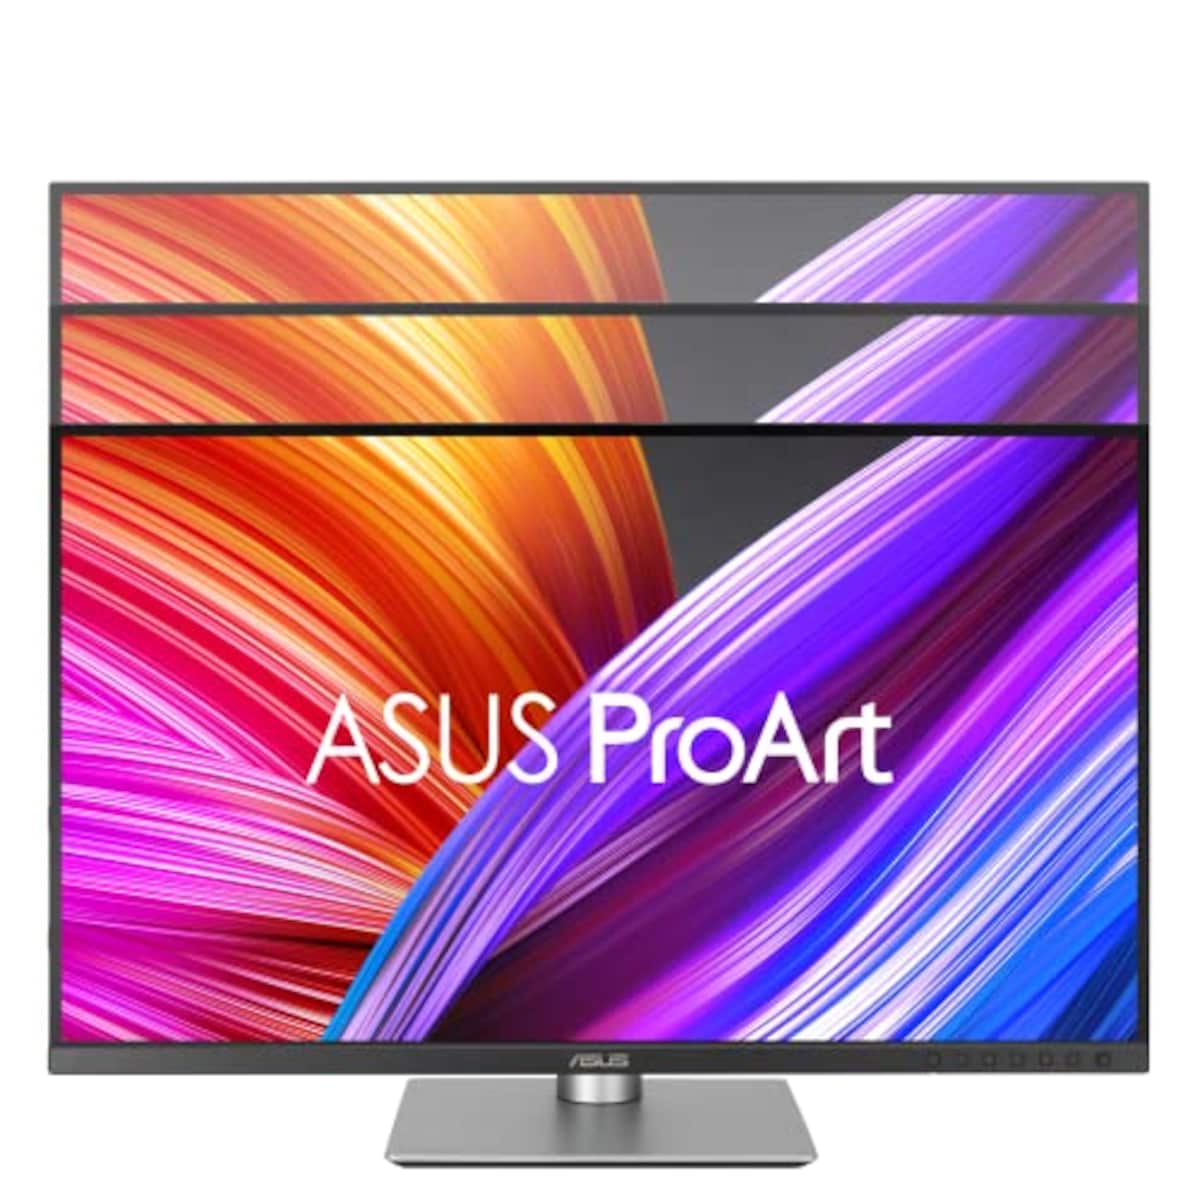  ASUS 4K モニター ProArt PA279CRV 27インチ/IPS/3年間無輝点保証/99% DCI-P3/99% Adobe RGB/USB-C PD 96W/色精度ΔE<2/VESA DisplayHDR 400/エルゴノミクススタンド/国内正規品画像9 